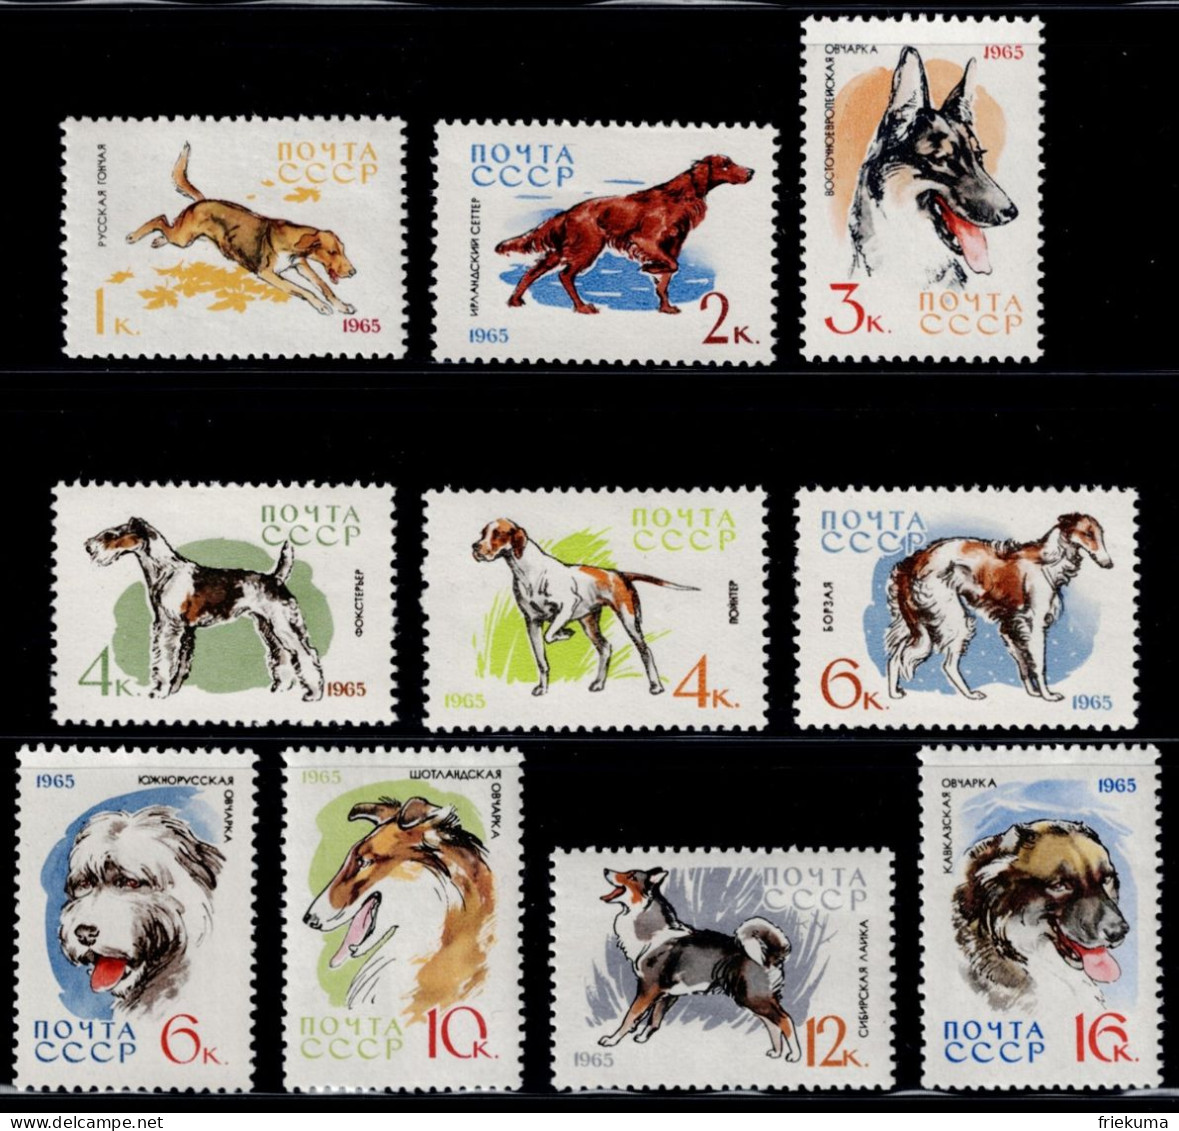 CCCP 1965, Service And Hunting Dogs: Russian Hound, Irish Setter, Eastern European Shepherd Dog, Etc., MiNr. 3020-3029 - Dogs